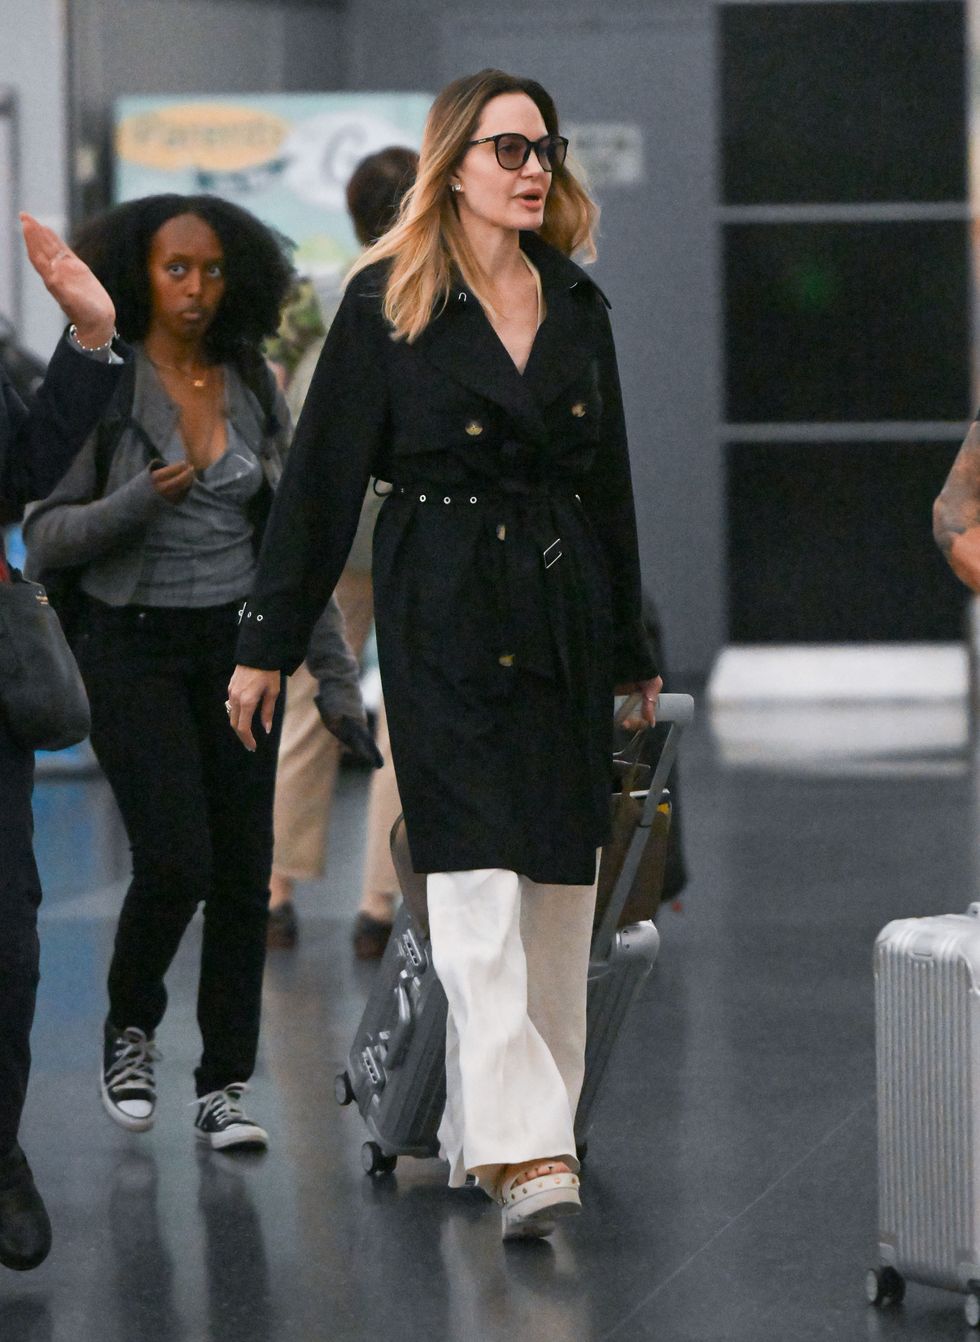 Angelina Jolie looks elegant in black as she walks through airport